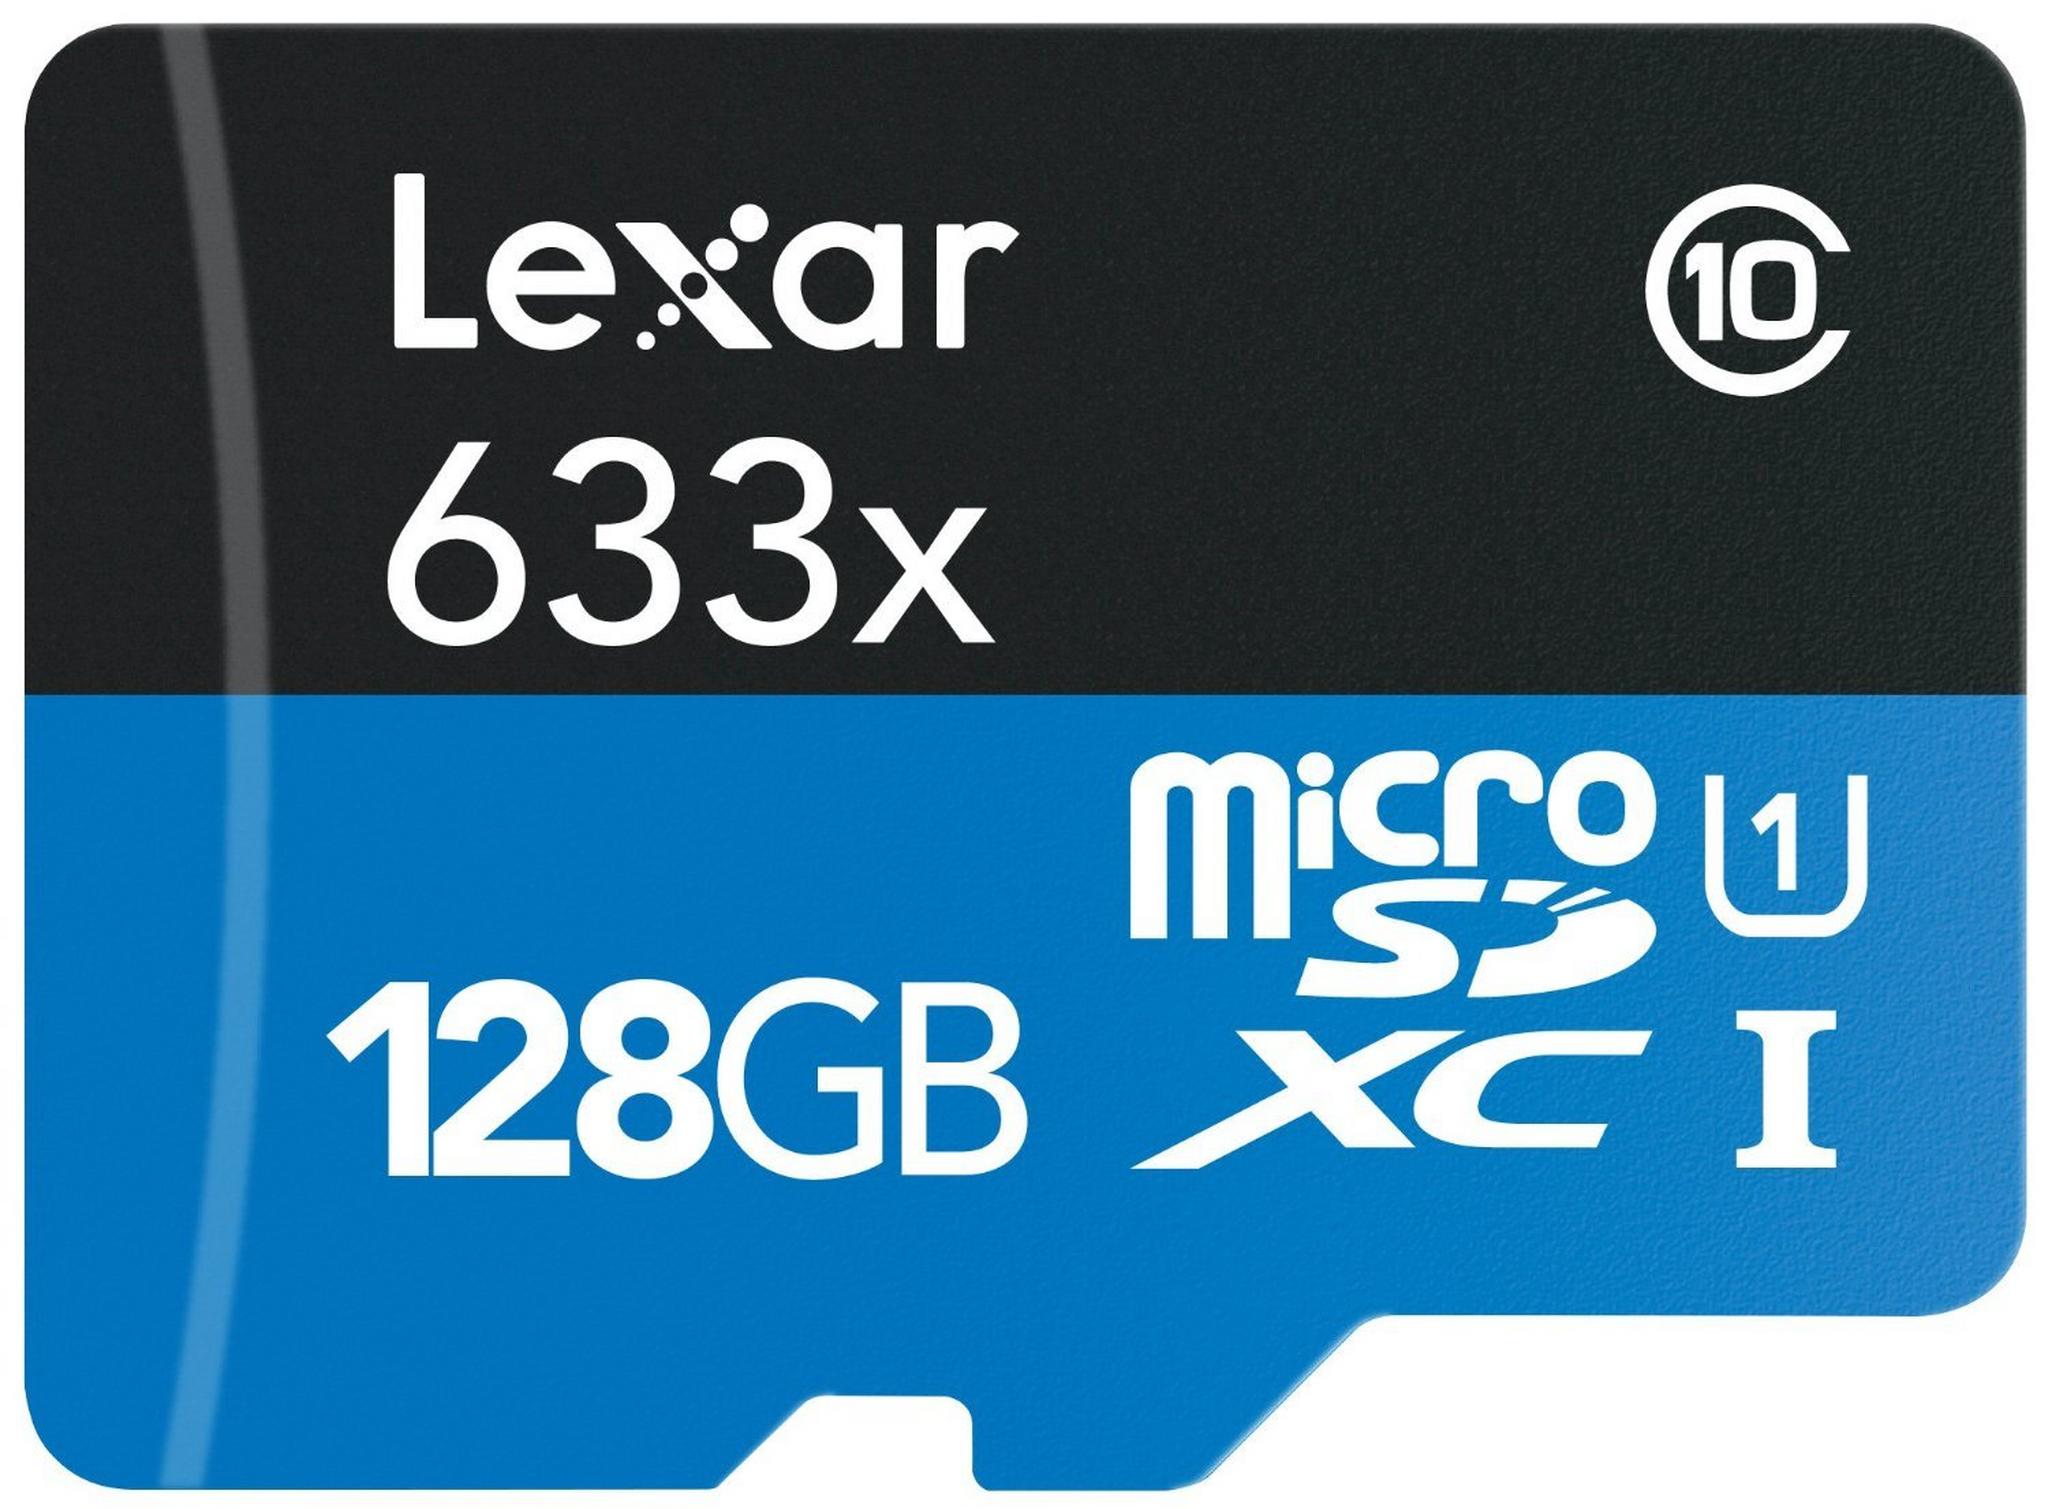 Lexar High-Performance 633x MicroSDHC/MicroSDXC UHS-I Memory Card